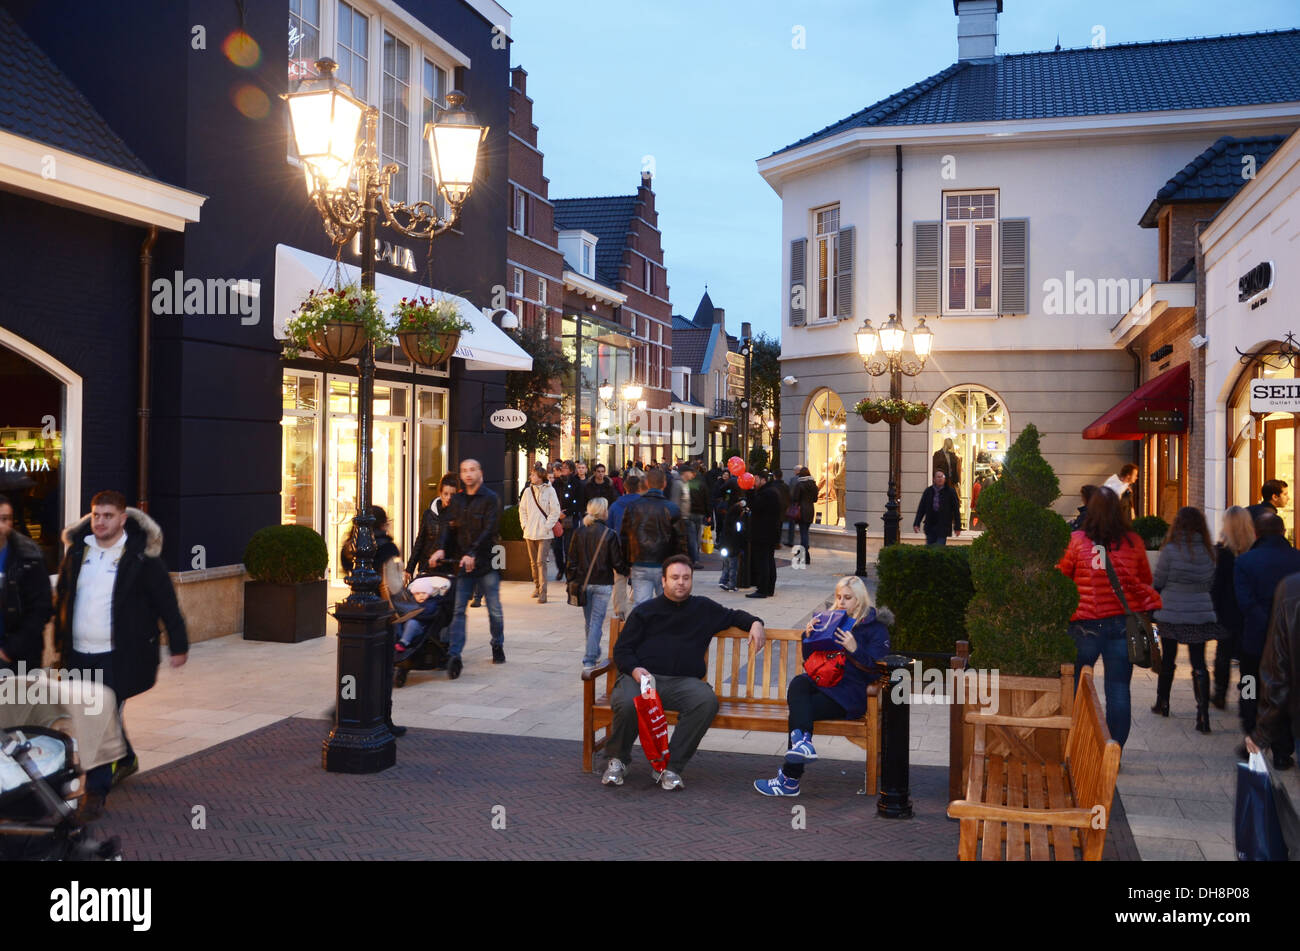 evening shopping at McArthur Glen Designer Outlet Center Roermond  Netherlands Stock Photo - Alamy